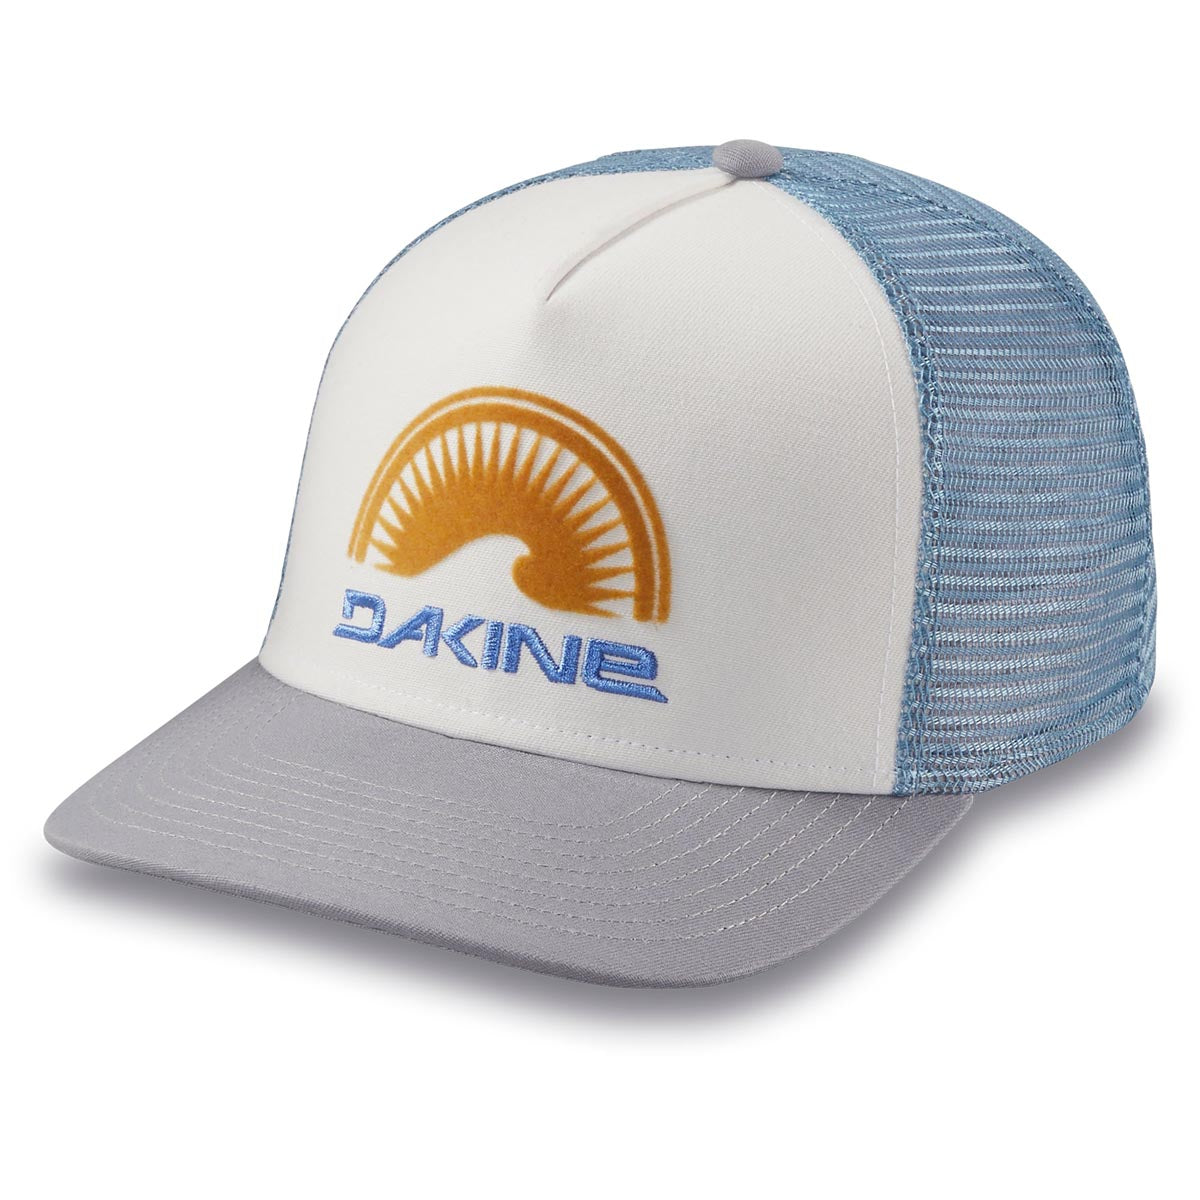 Dakine All Sports Lx Trucker Hat - Griffin image 1